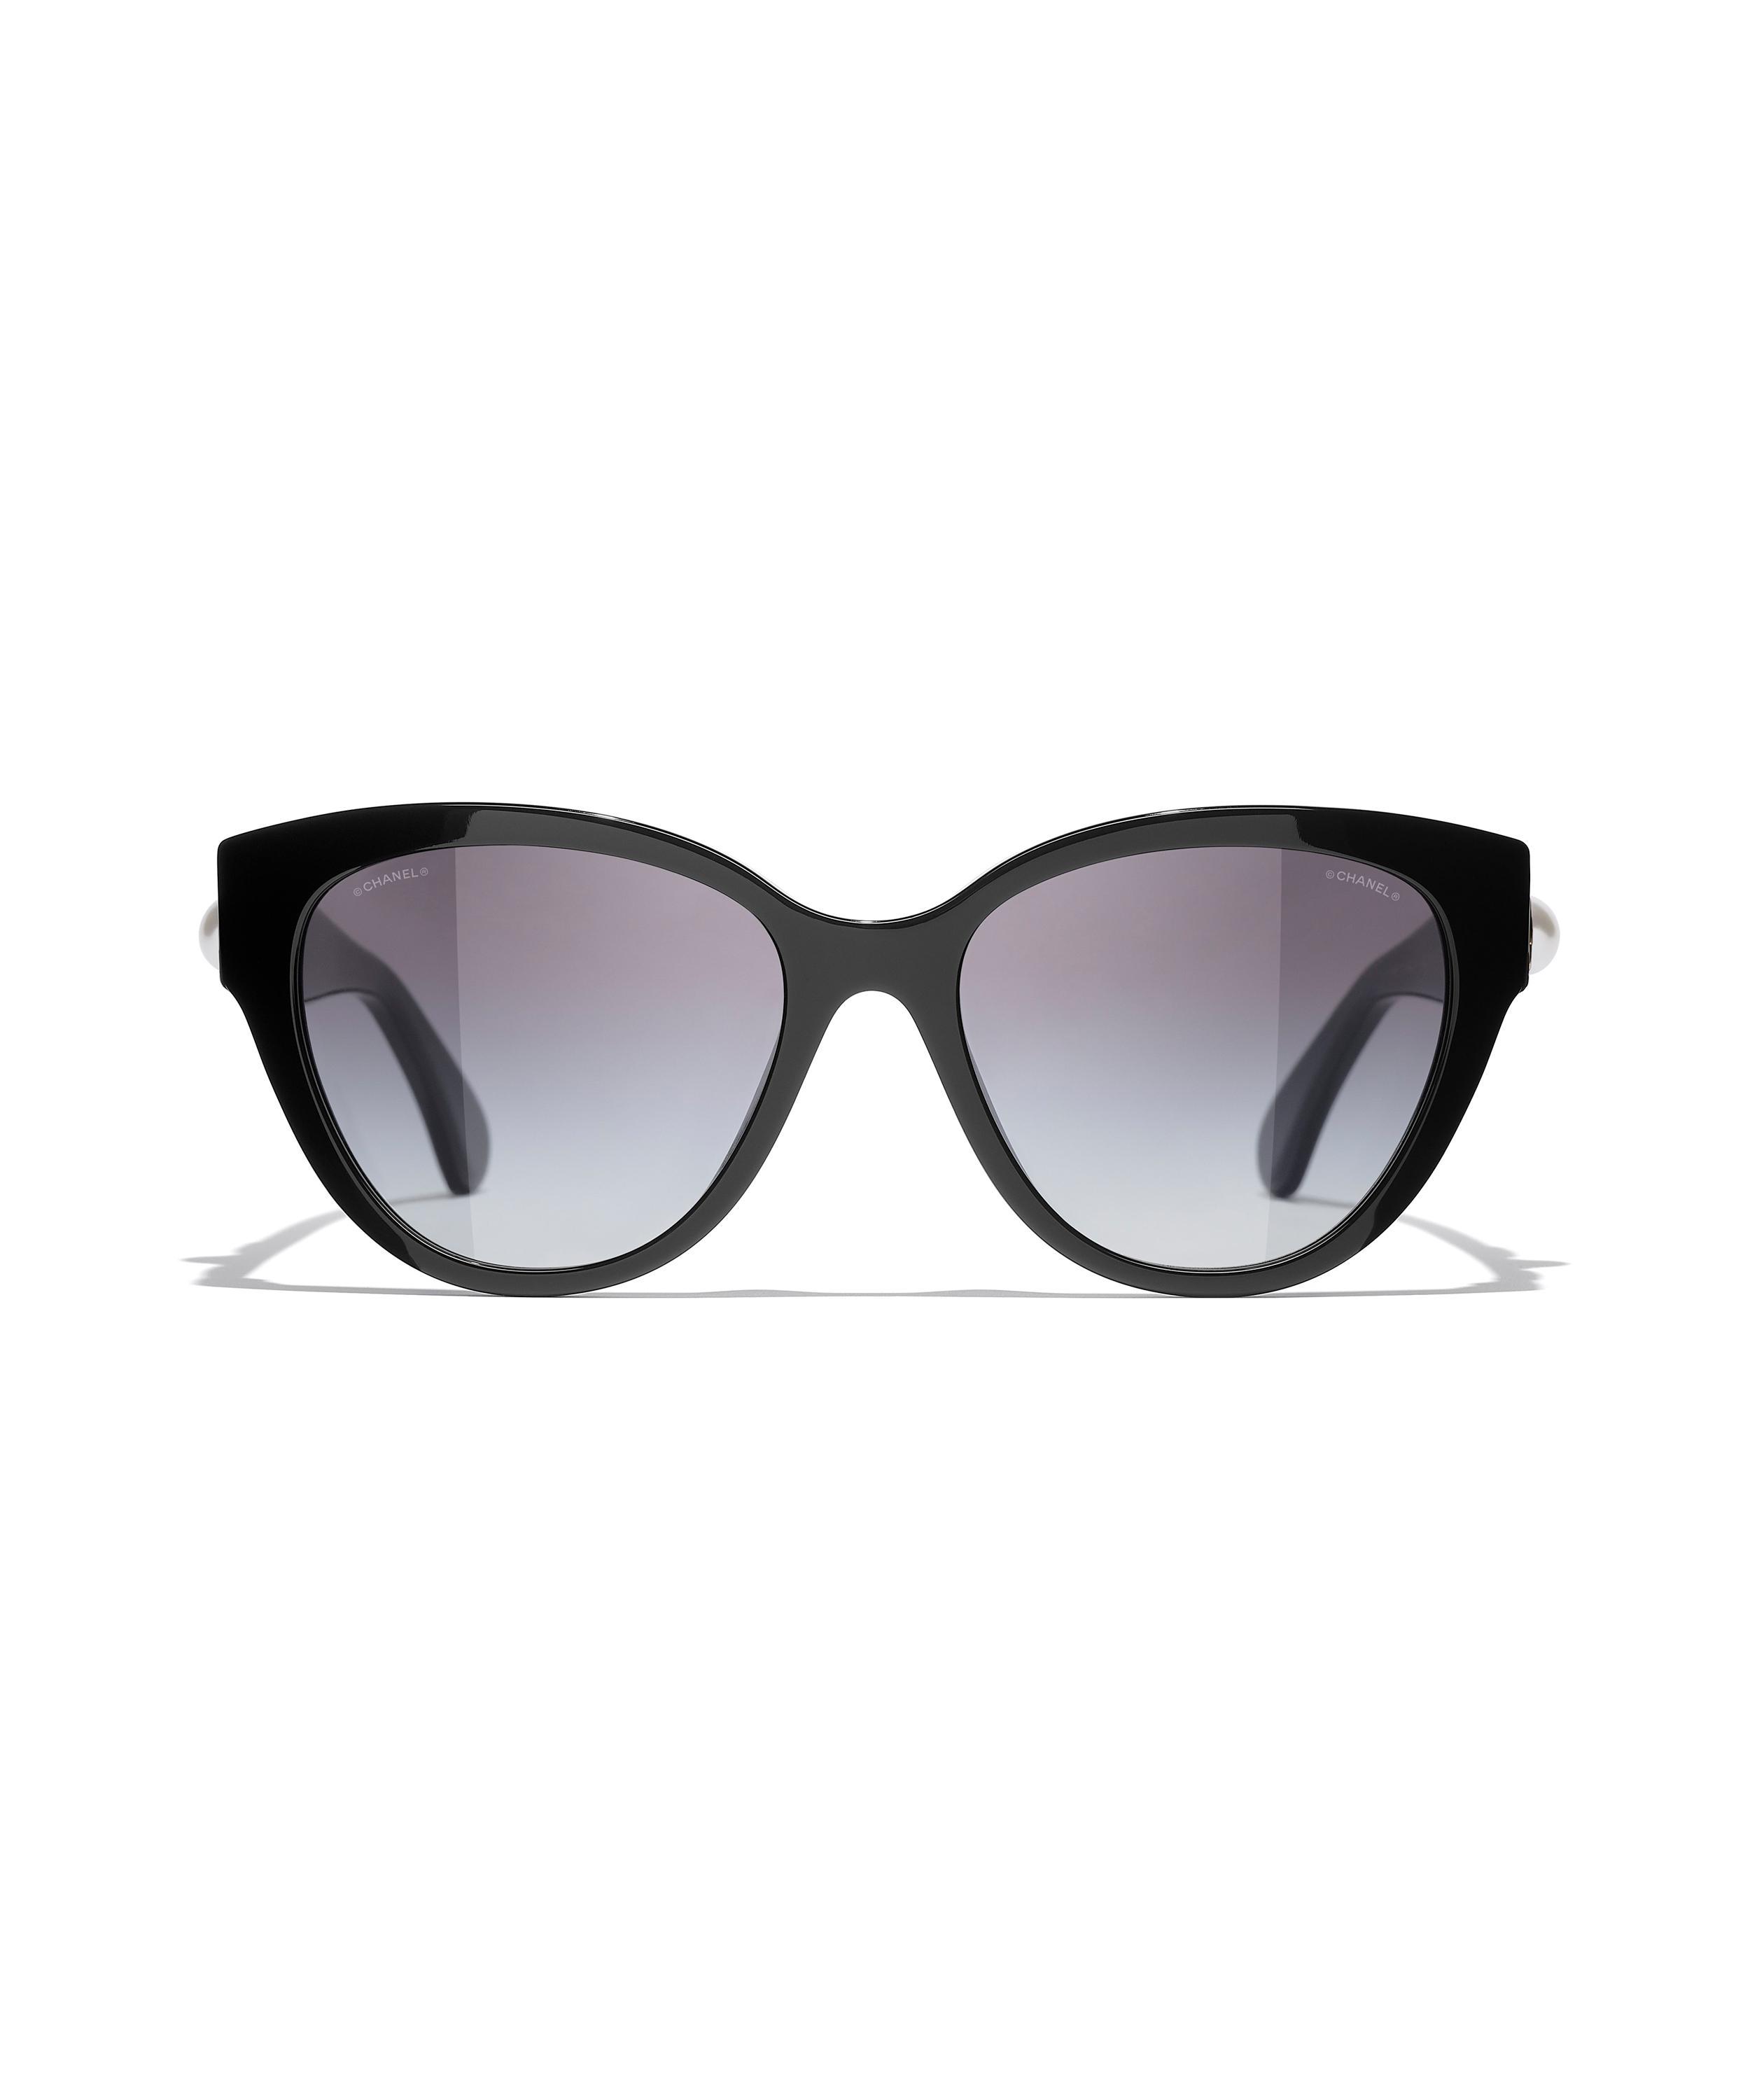 Chanel Women's Cat-eye Round Sunglasses in Black